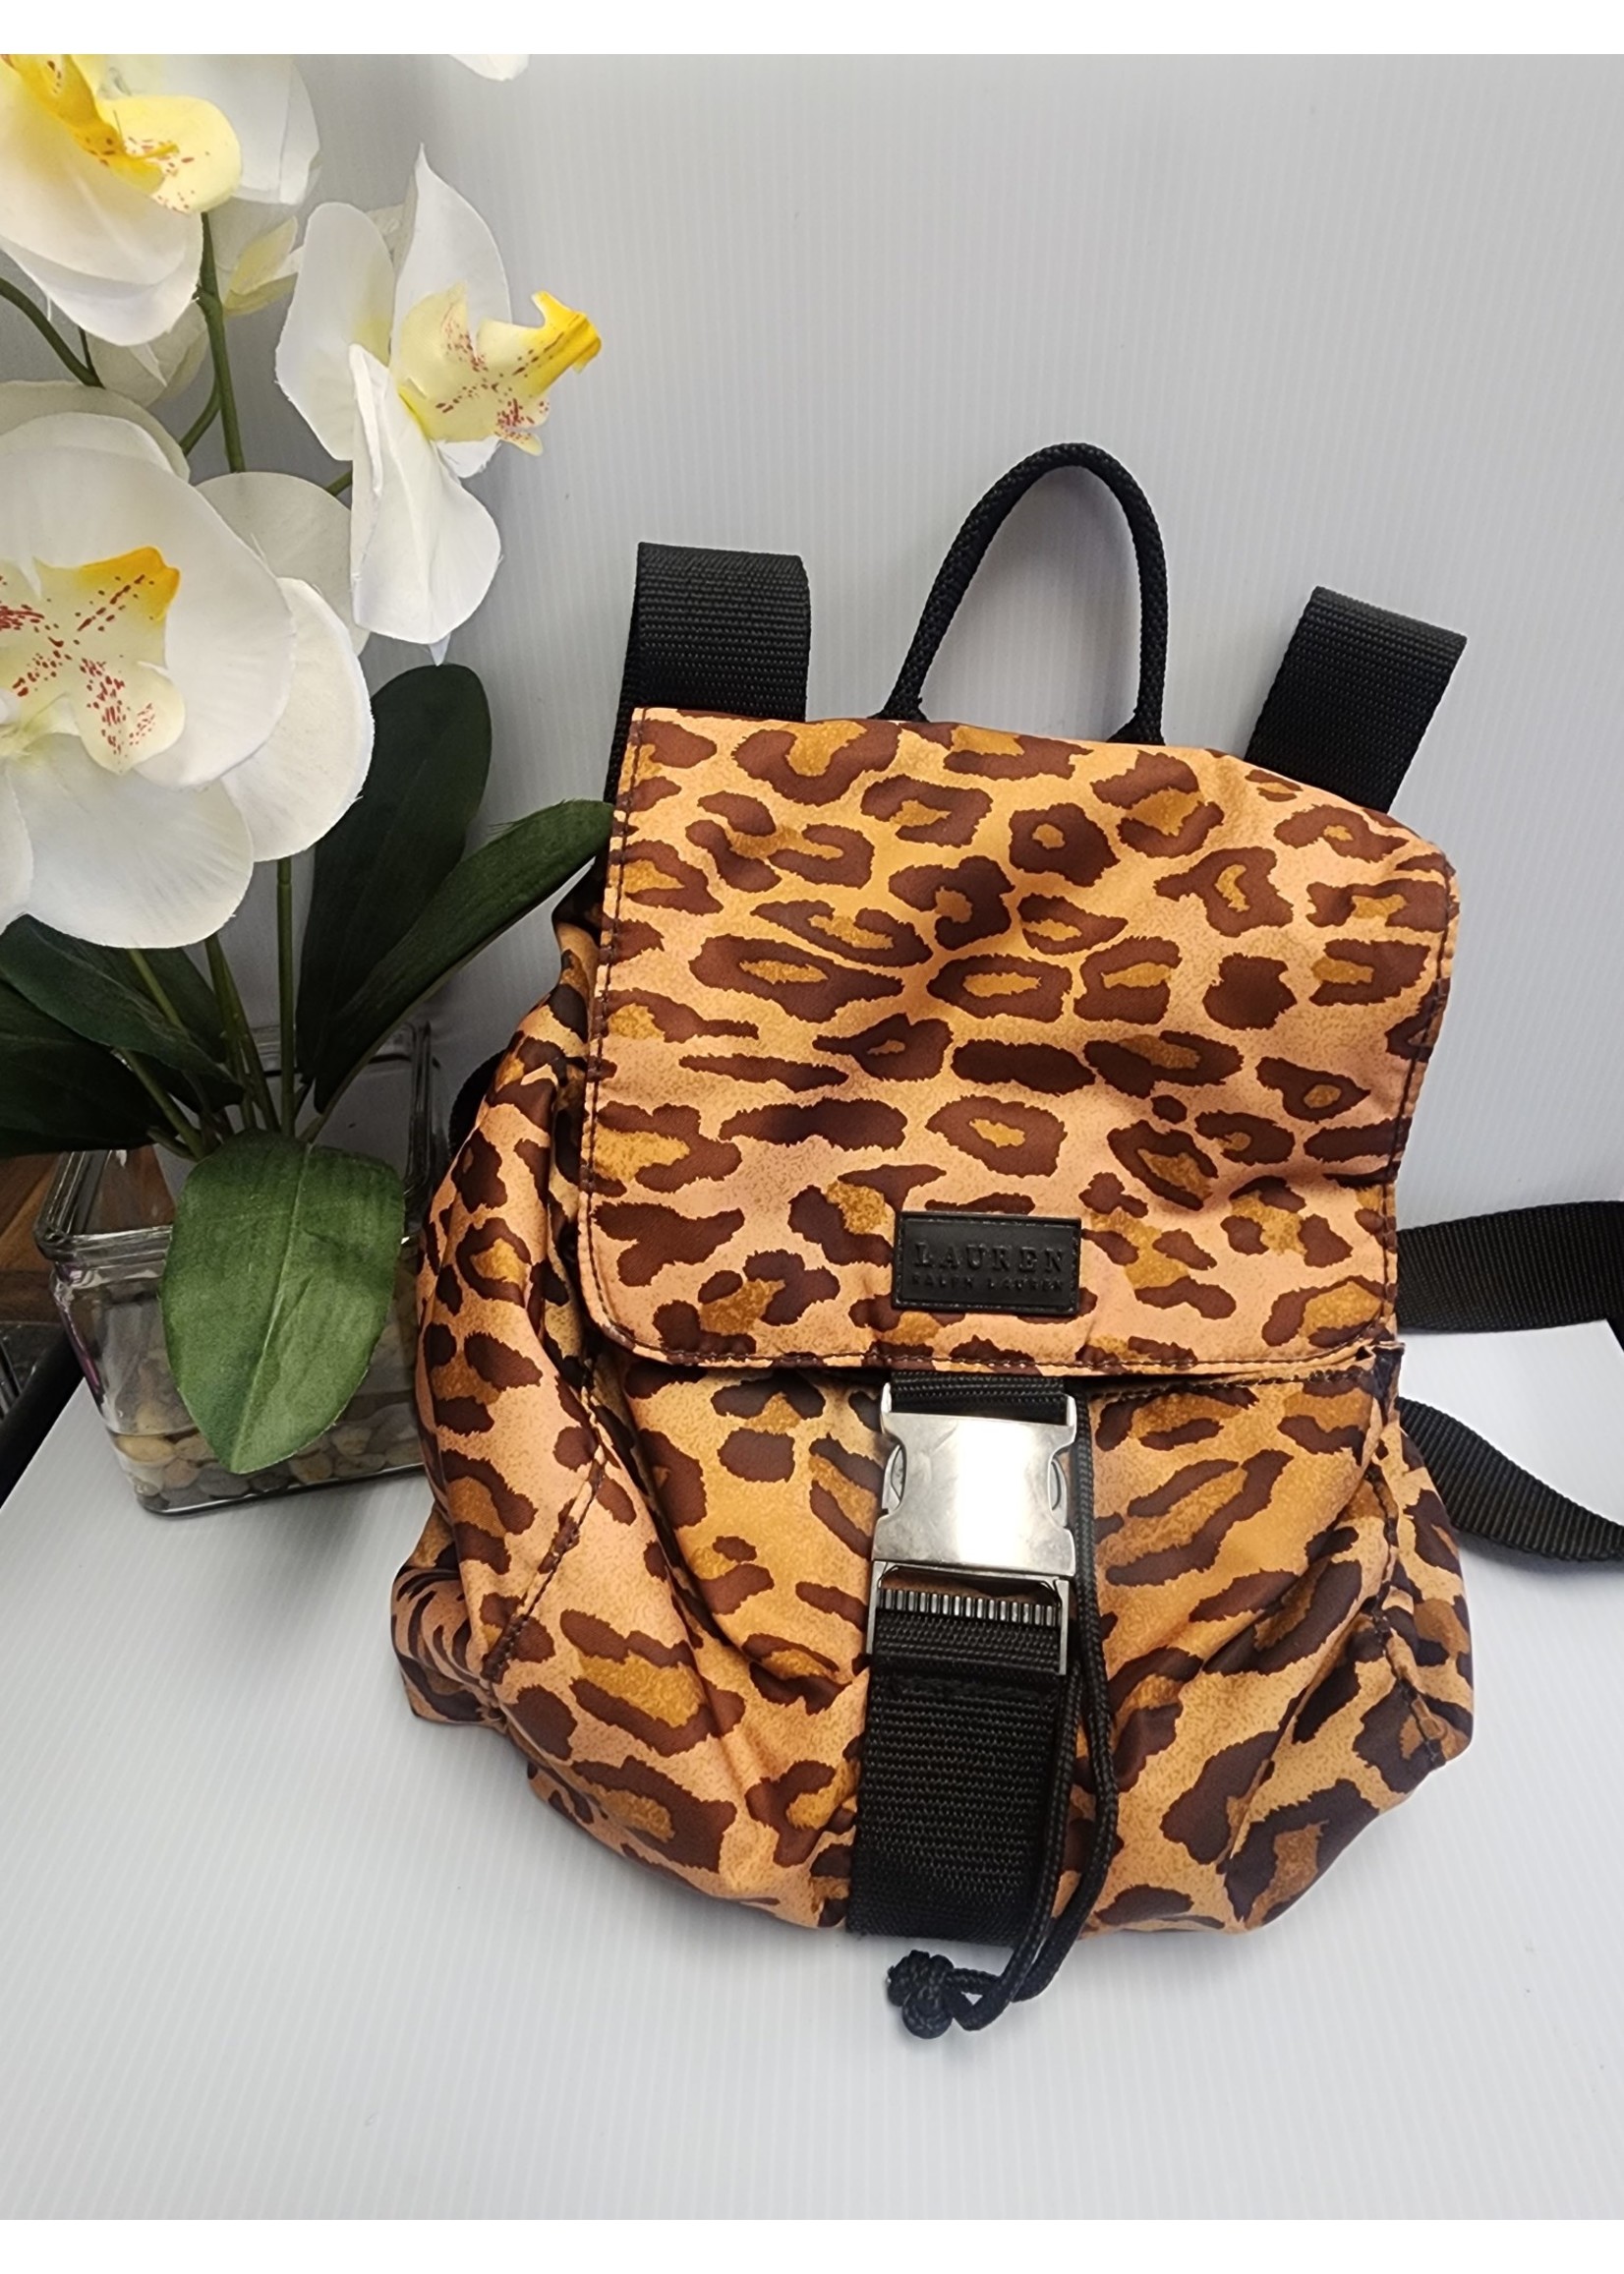 Cupcake Couture) Leopard Print Backpack in Beige | DEICHMANN